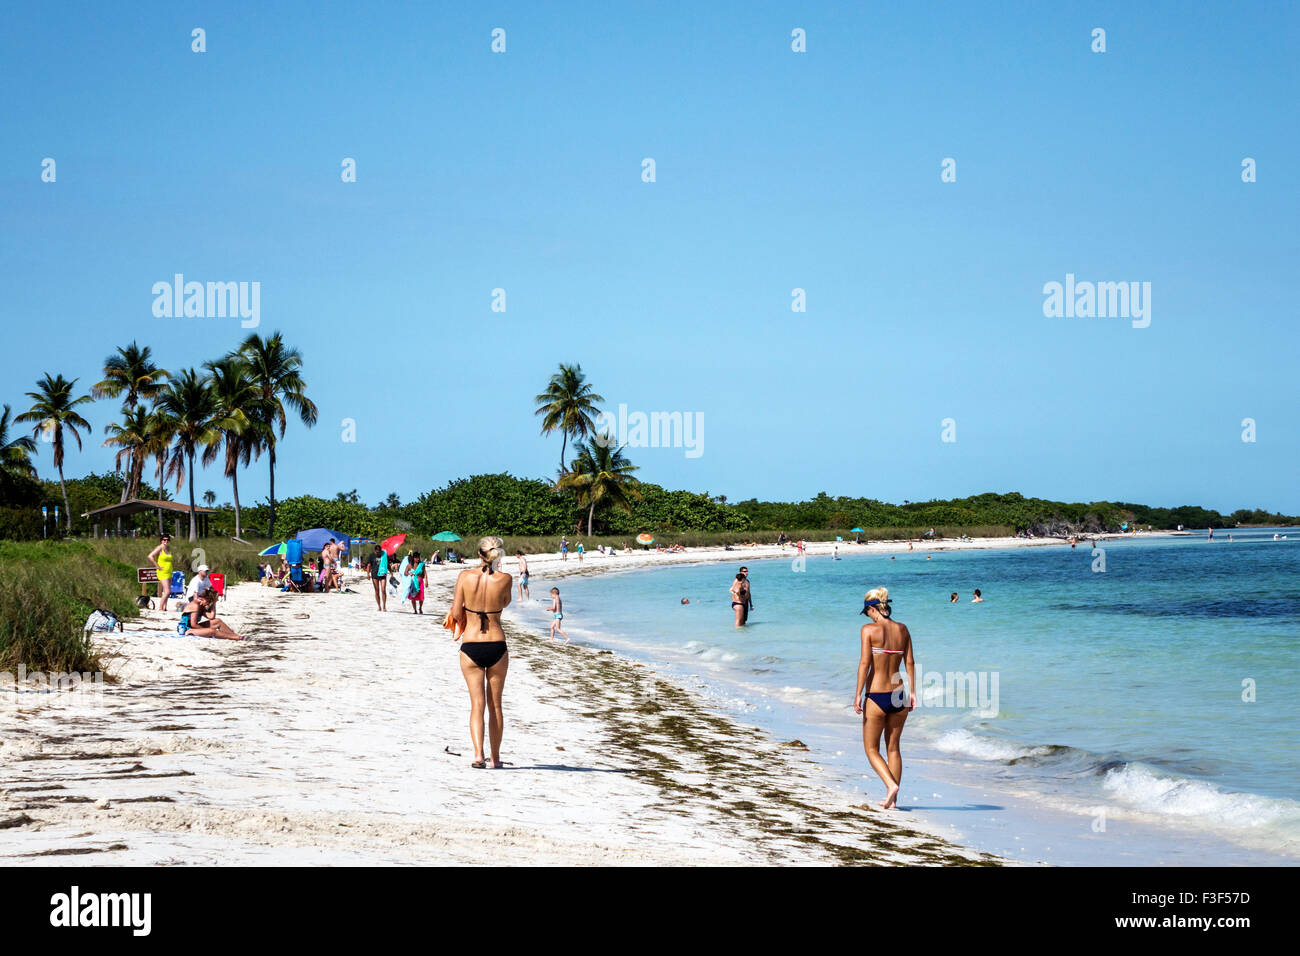 Florida Keys,Big Pine Key,Bahia Honda State Park,Atlantic Ocean,beach,sunbathers,FL150508044 Stock Photo